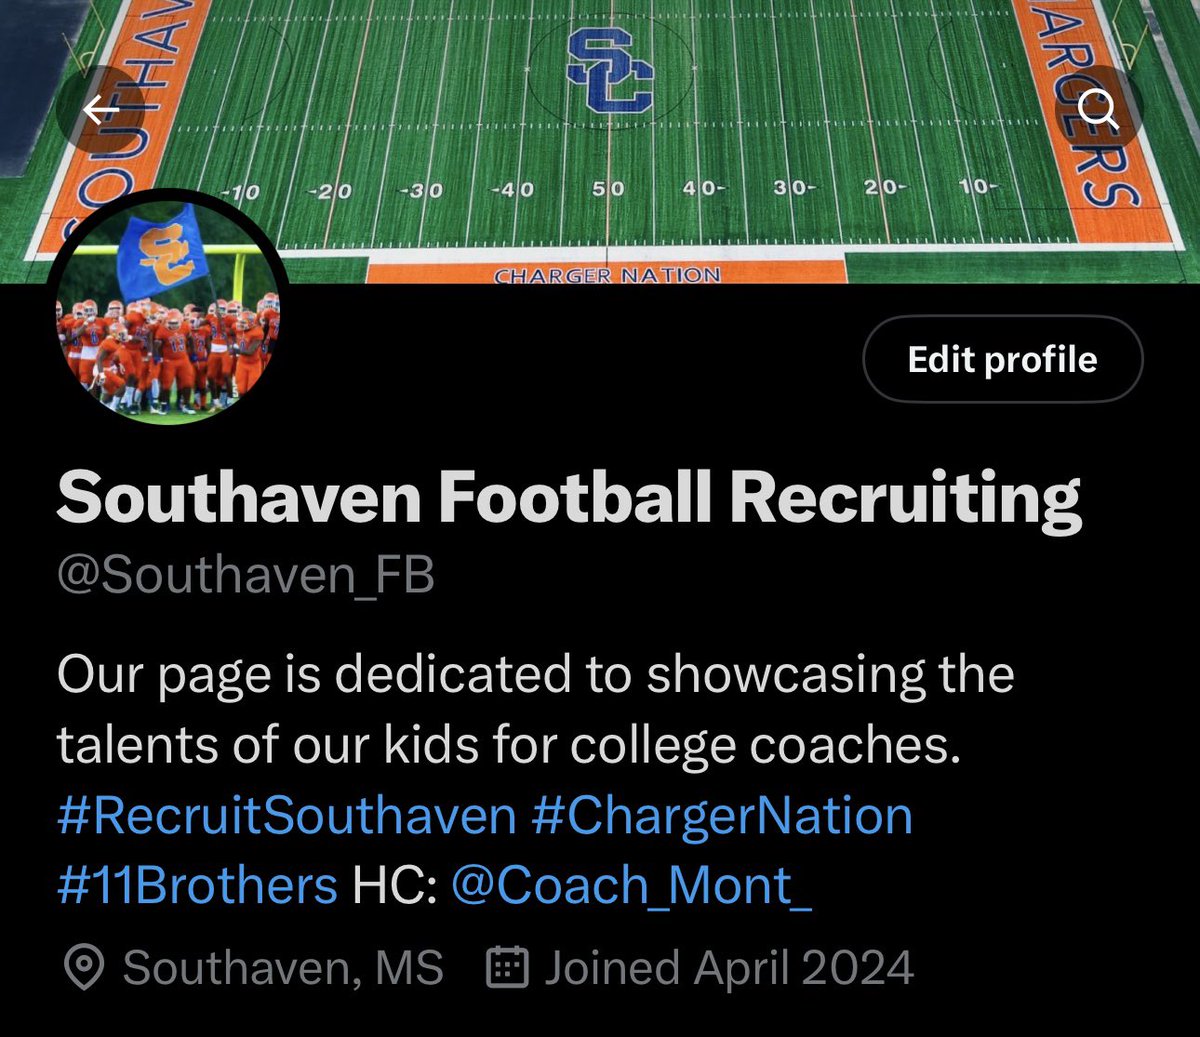 Give us a follow! 

@Southaven_FB